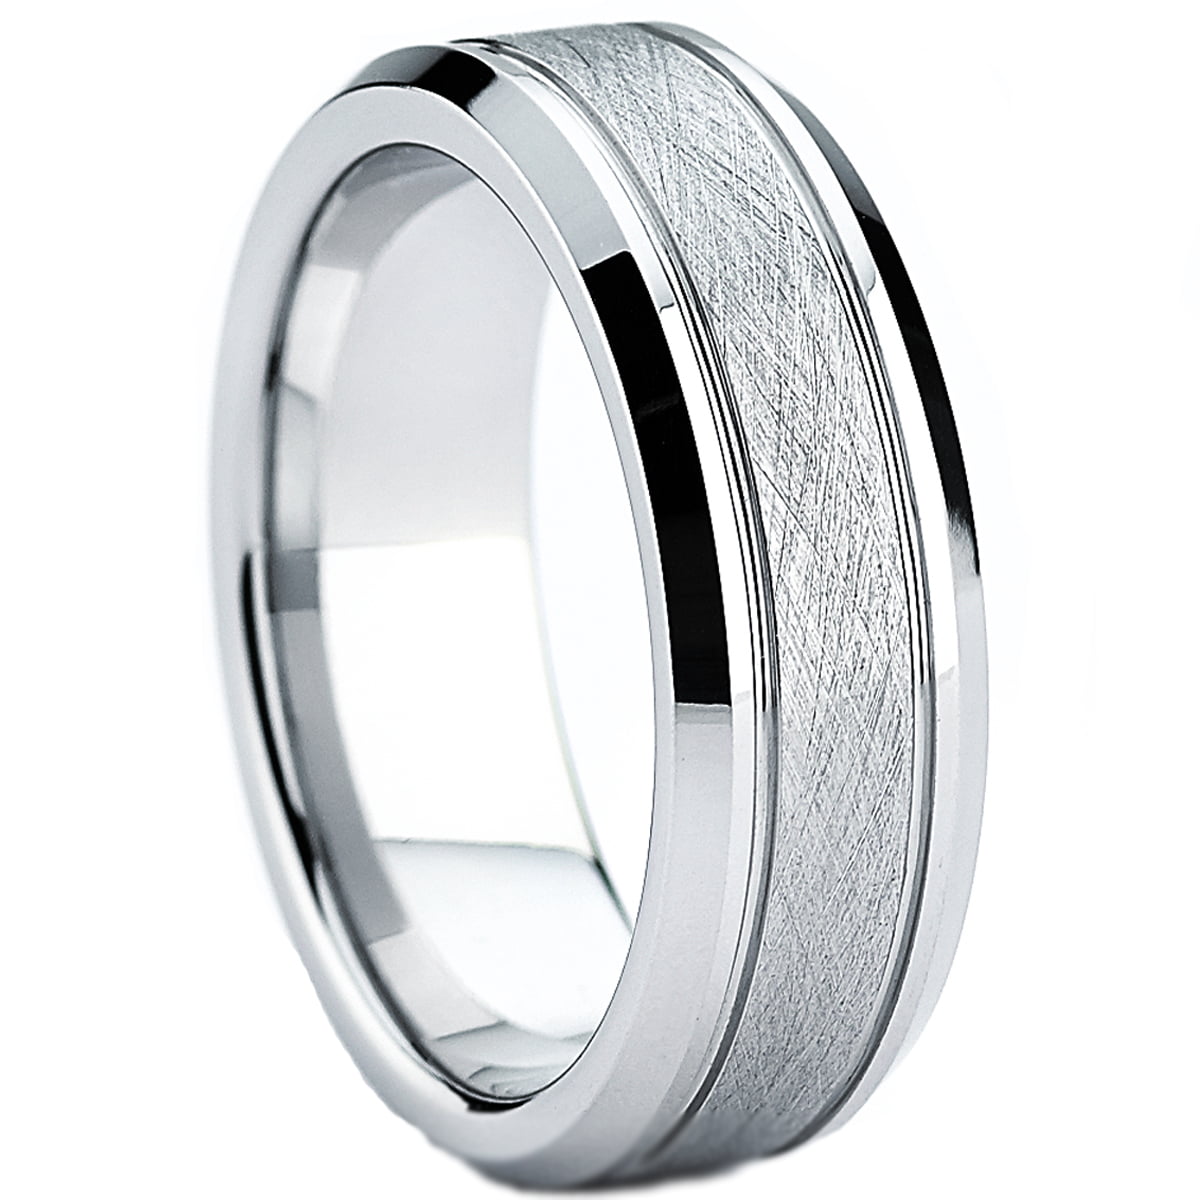 Polished Finish Sizes 7-12 Cobalt 7mm Comfort Fit Plain Dome Wedding Band Ring 